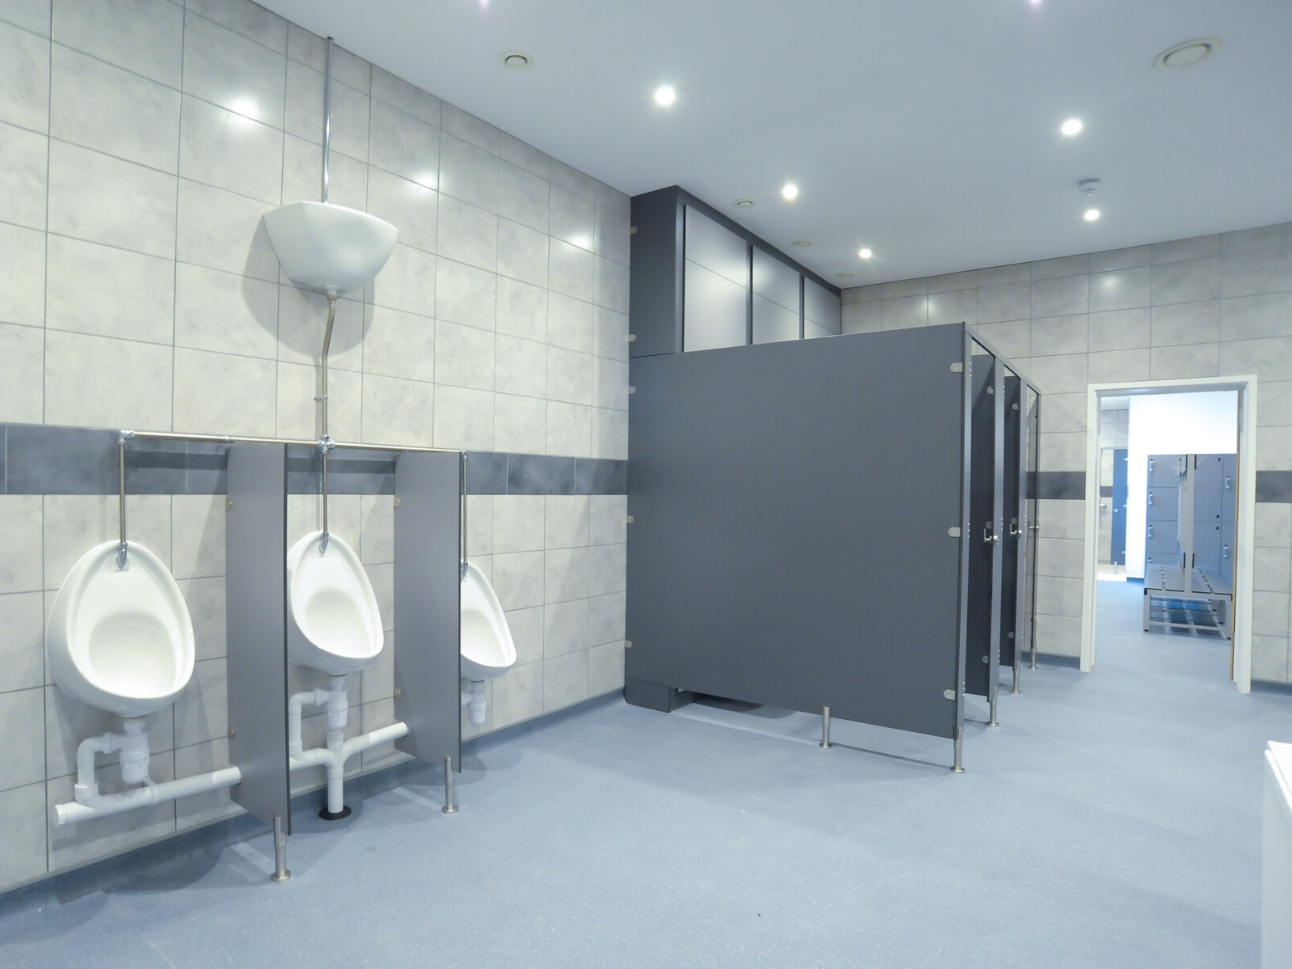 Wexham Park Golf Centre Washroom Refurbishment | Case Study | Commercial Washrooms